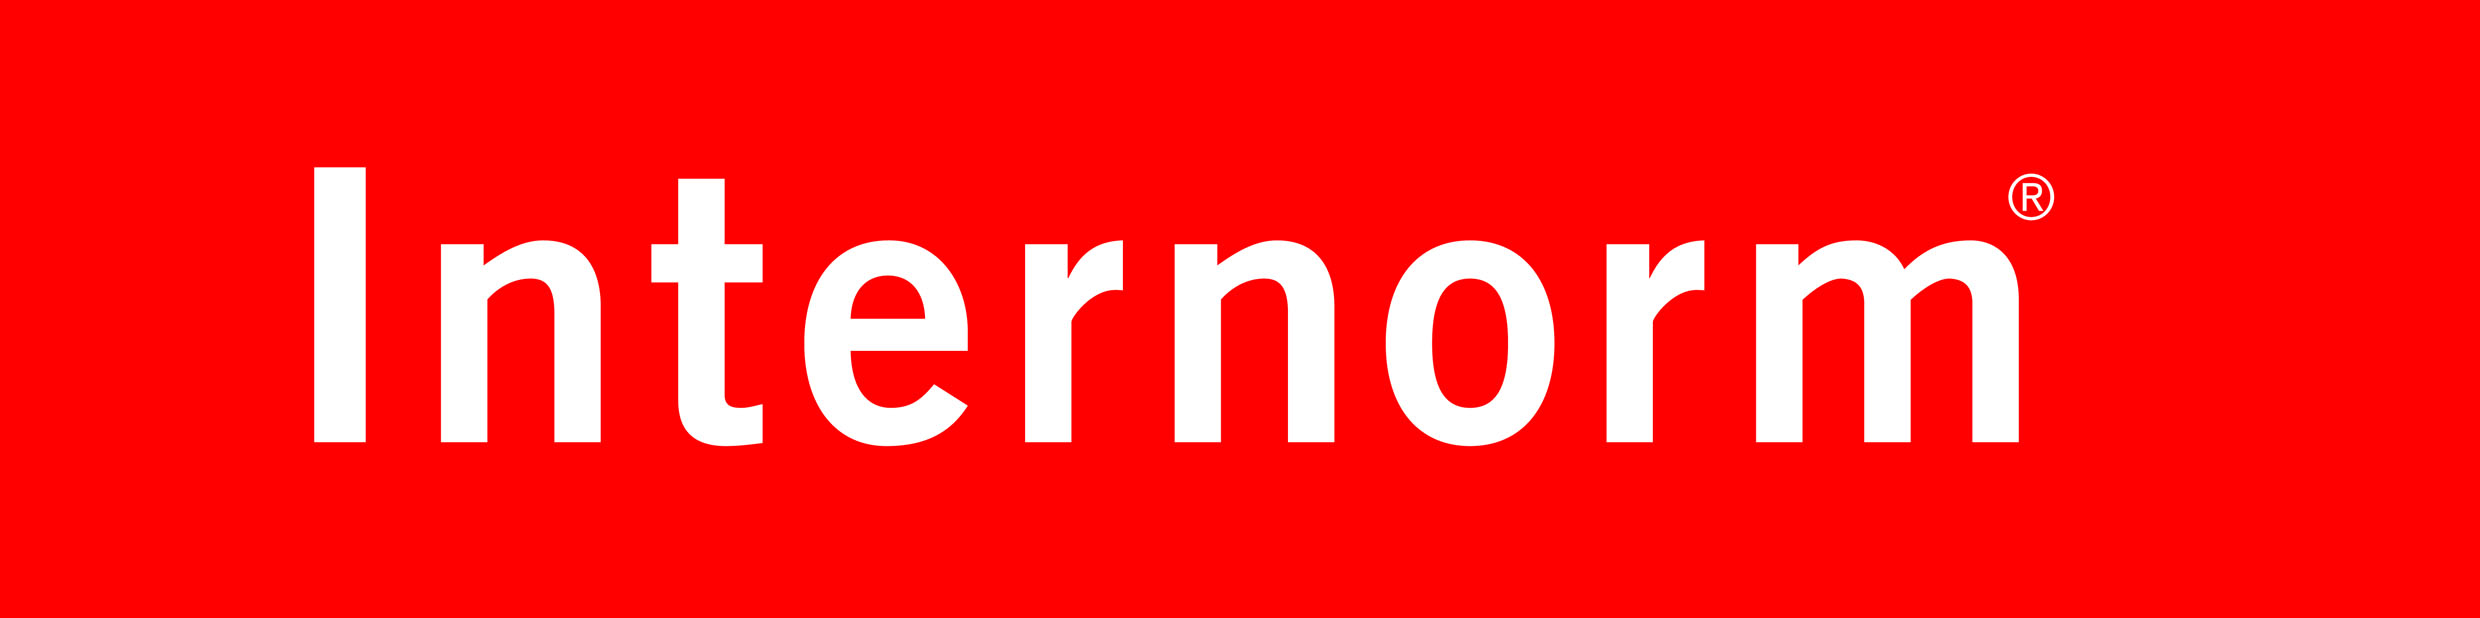 Logo Internorm N°1 en Europe